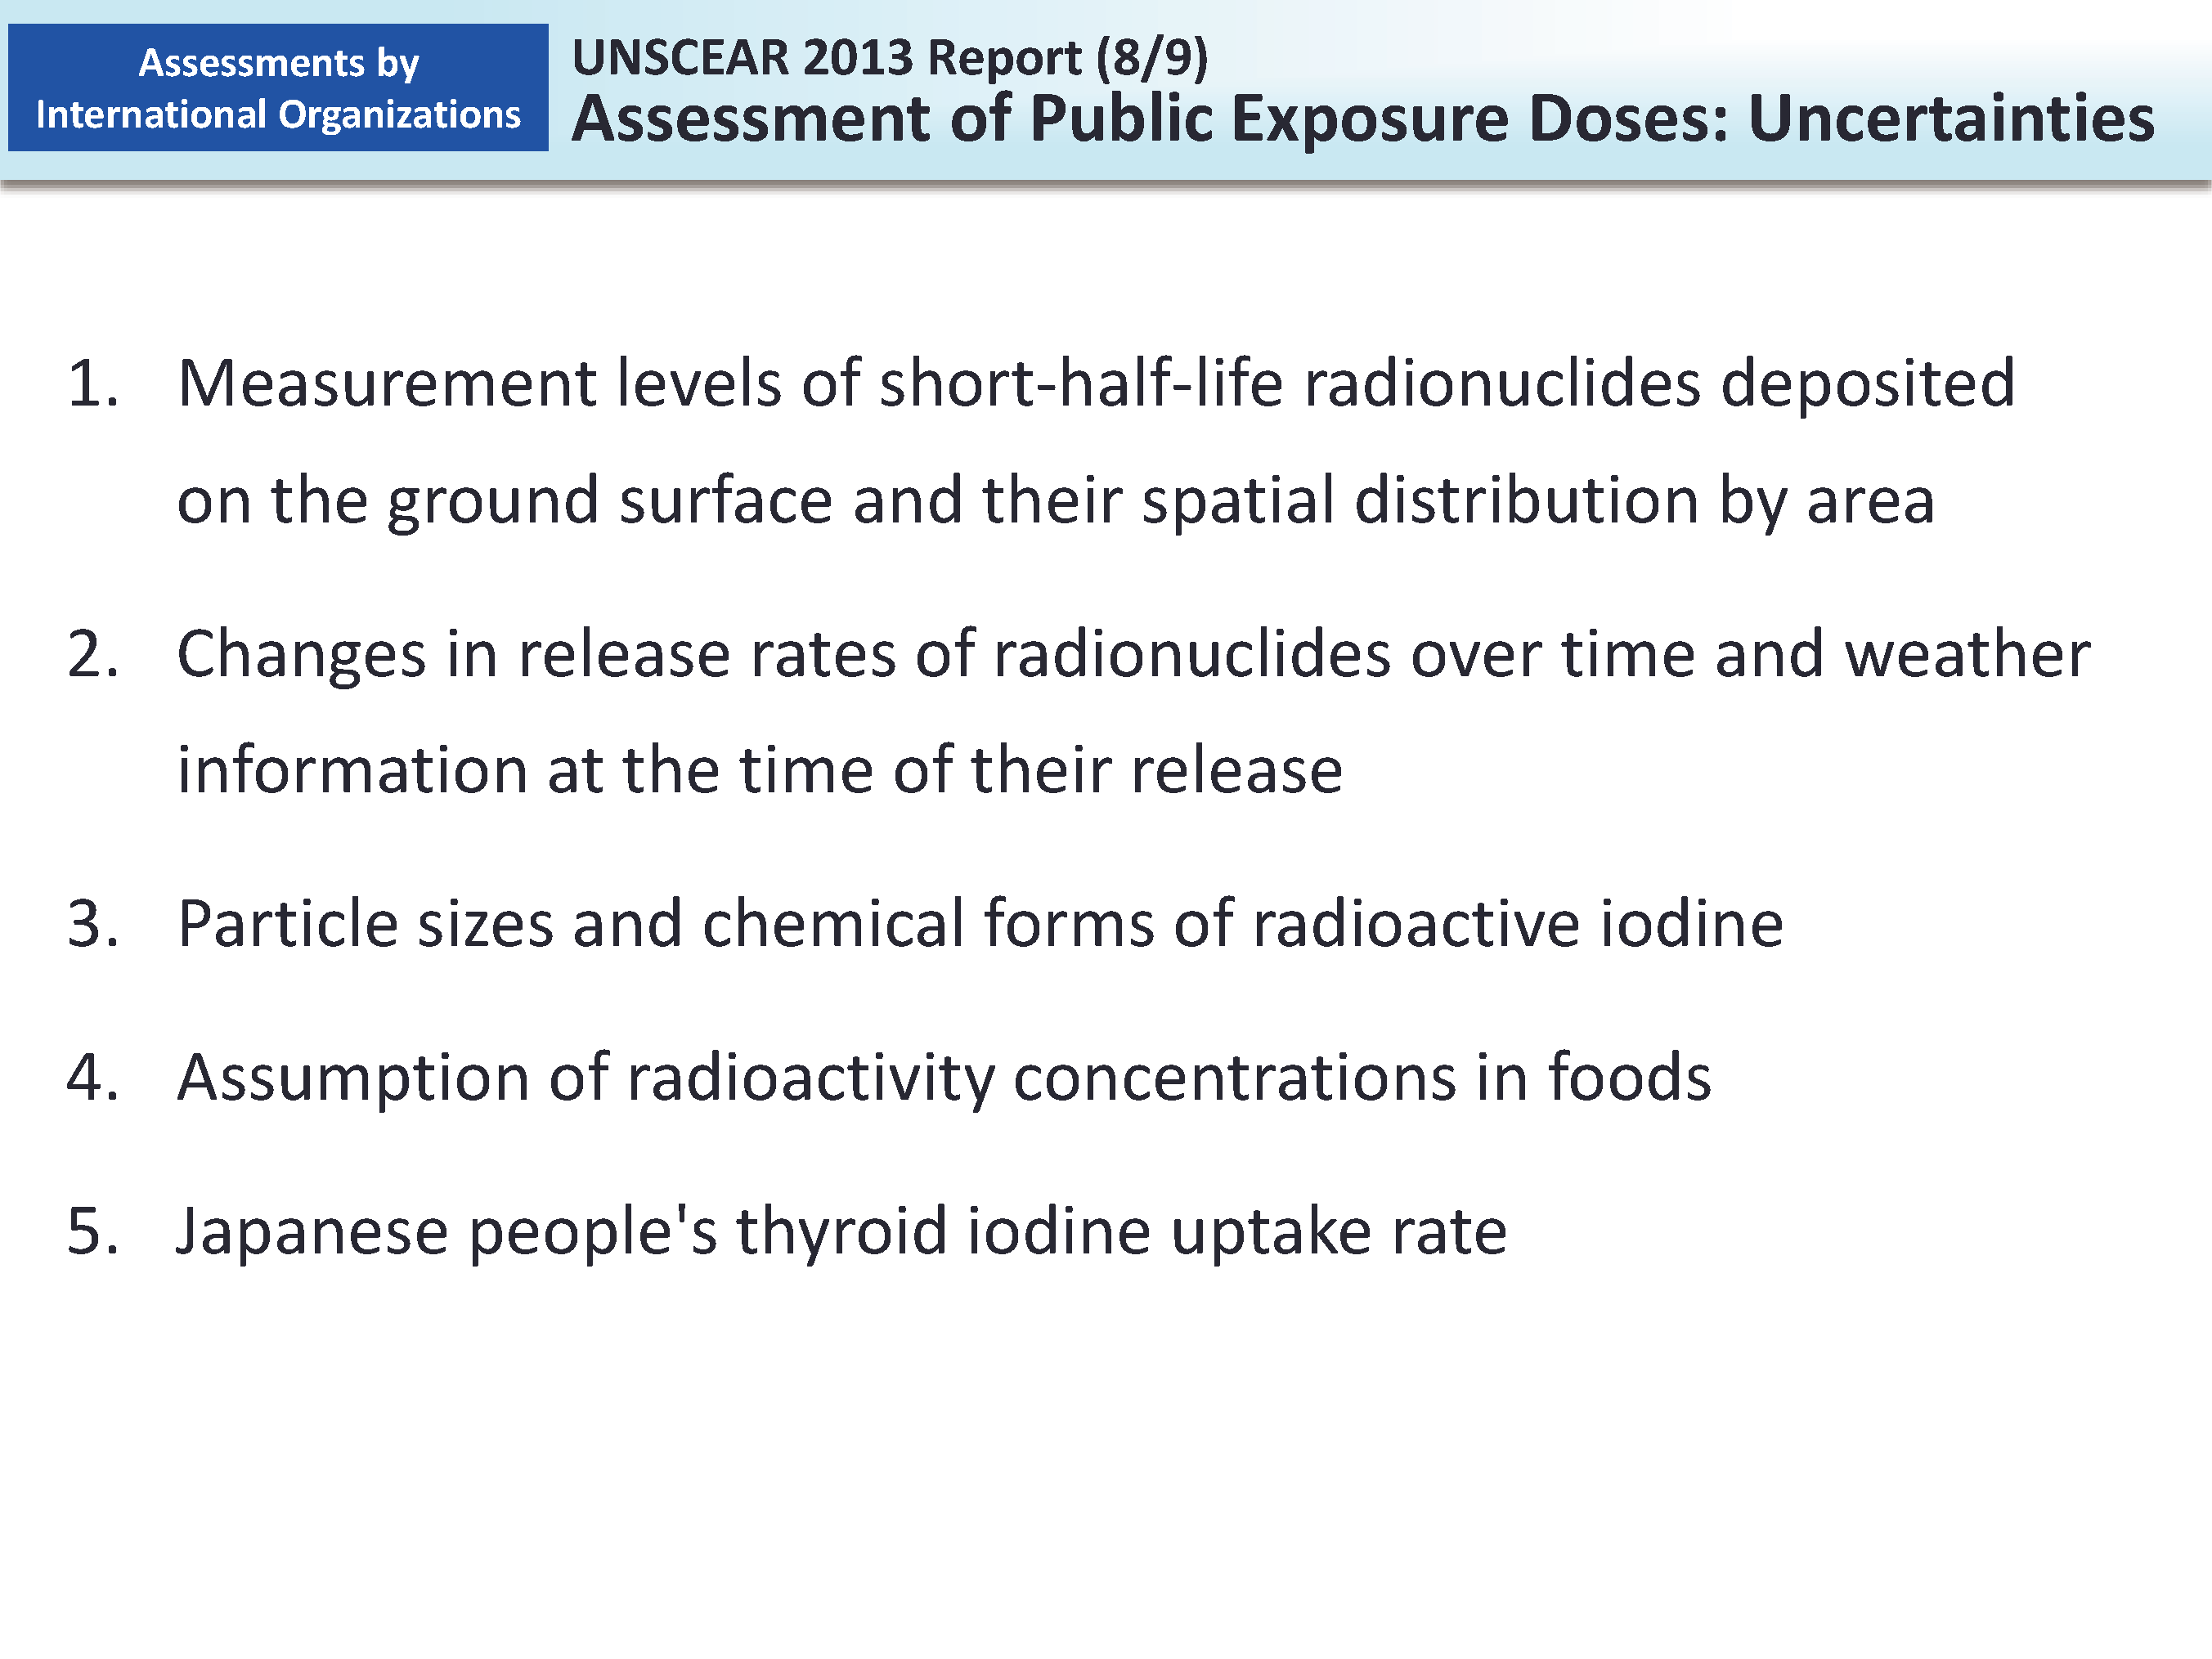 UNSCEAR 2013 Report (8/9) Assessment of Public Exposure Doses: Uncertainties_Figure